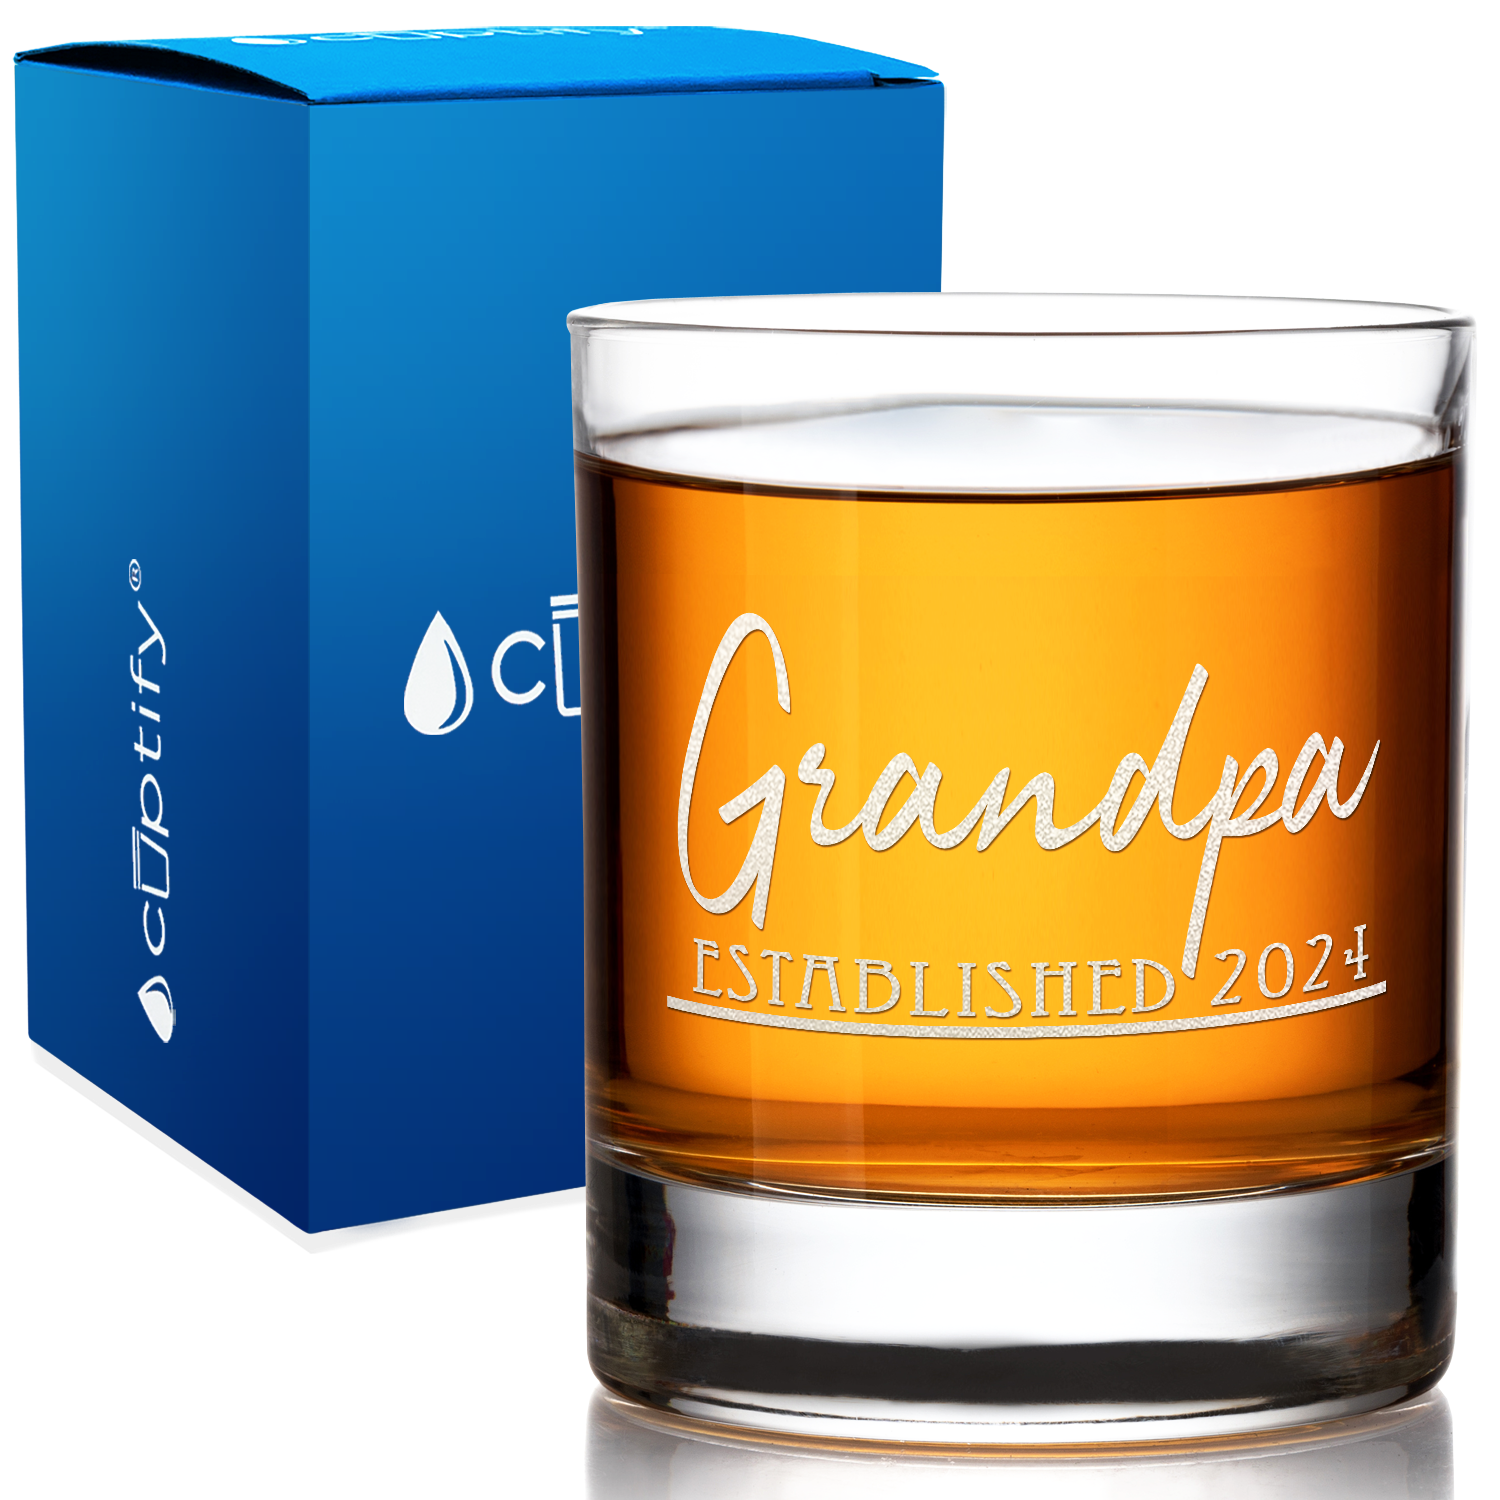 Grandpa Established on 10.25 oz Old Fashioned Glass